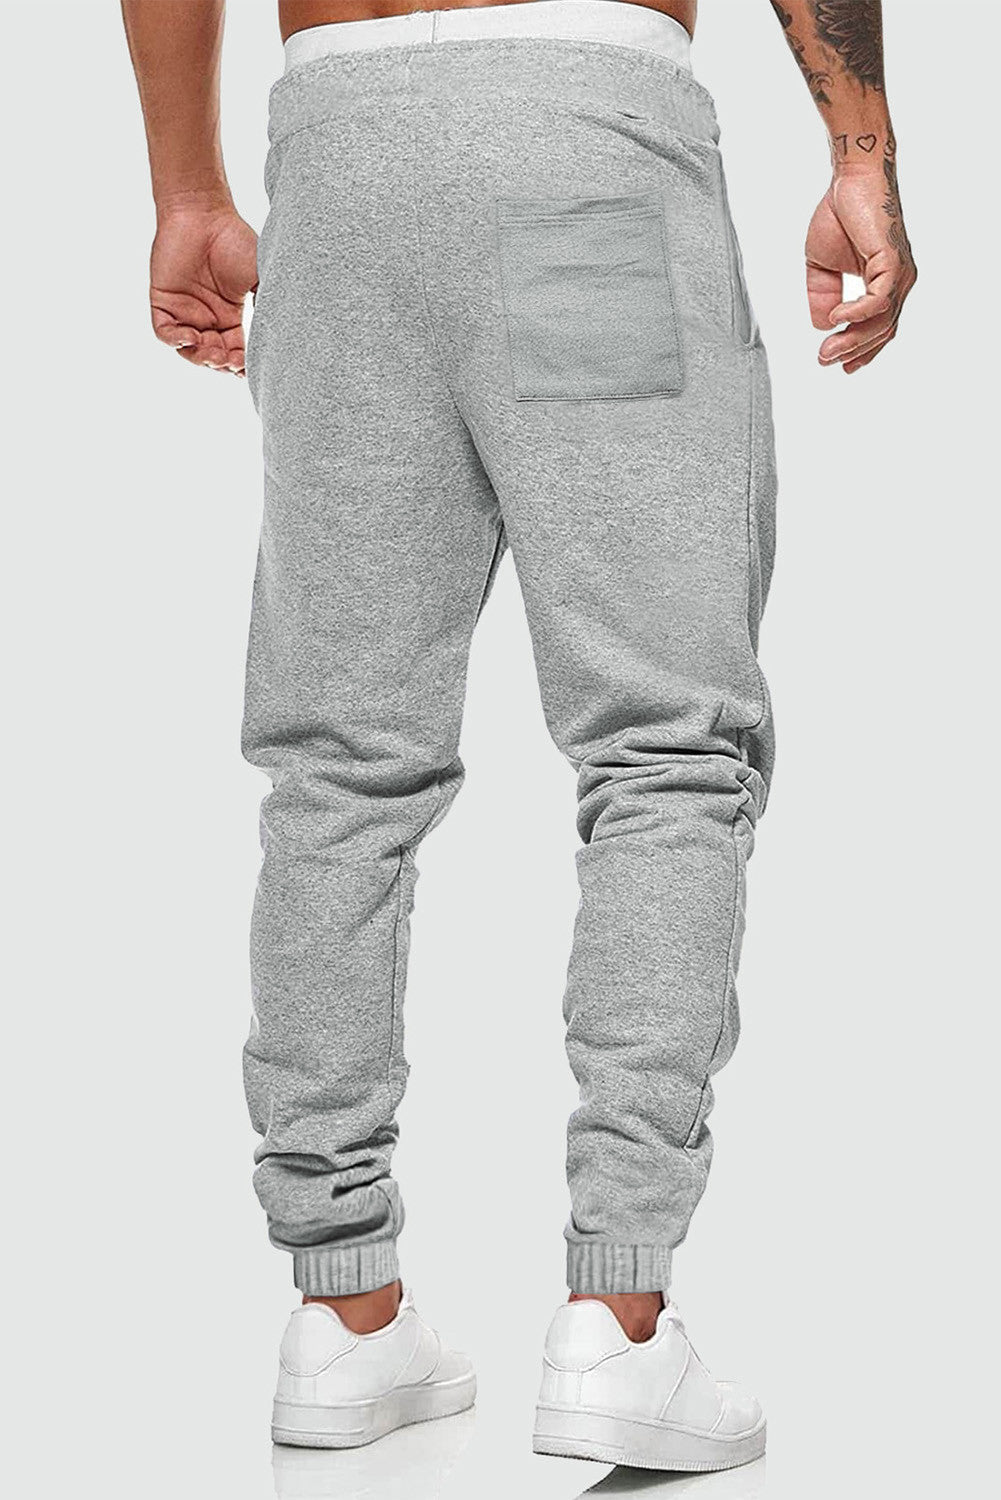 Gray American Flag Baseball Graphic Print Men's Sweatpants Men's Pants JT's Designer Fashion